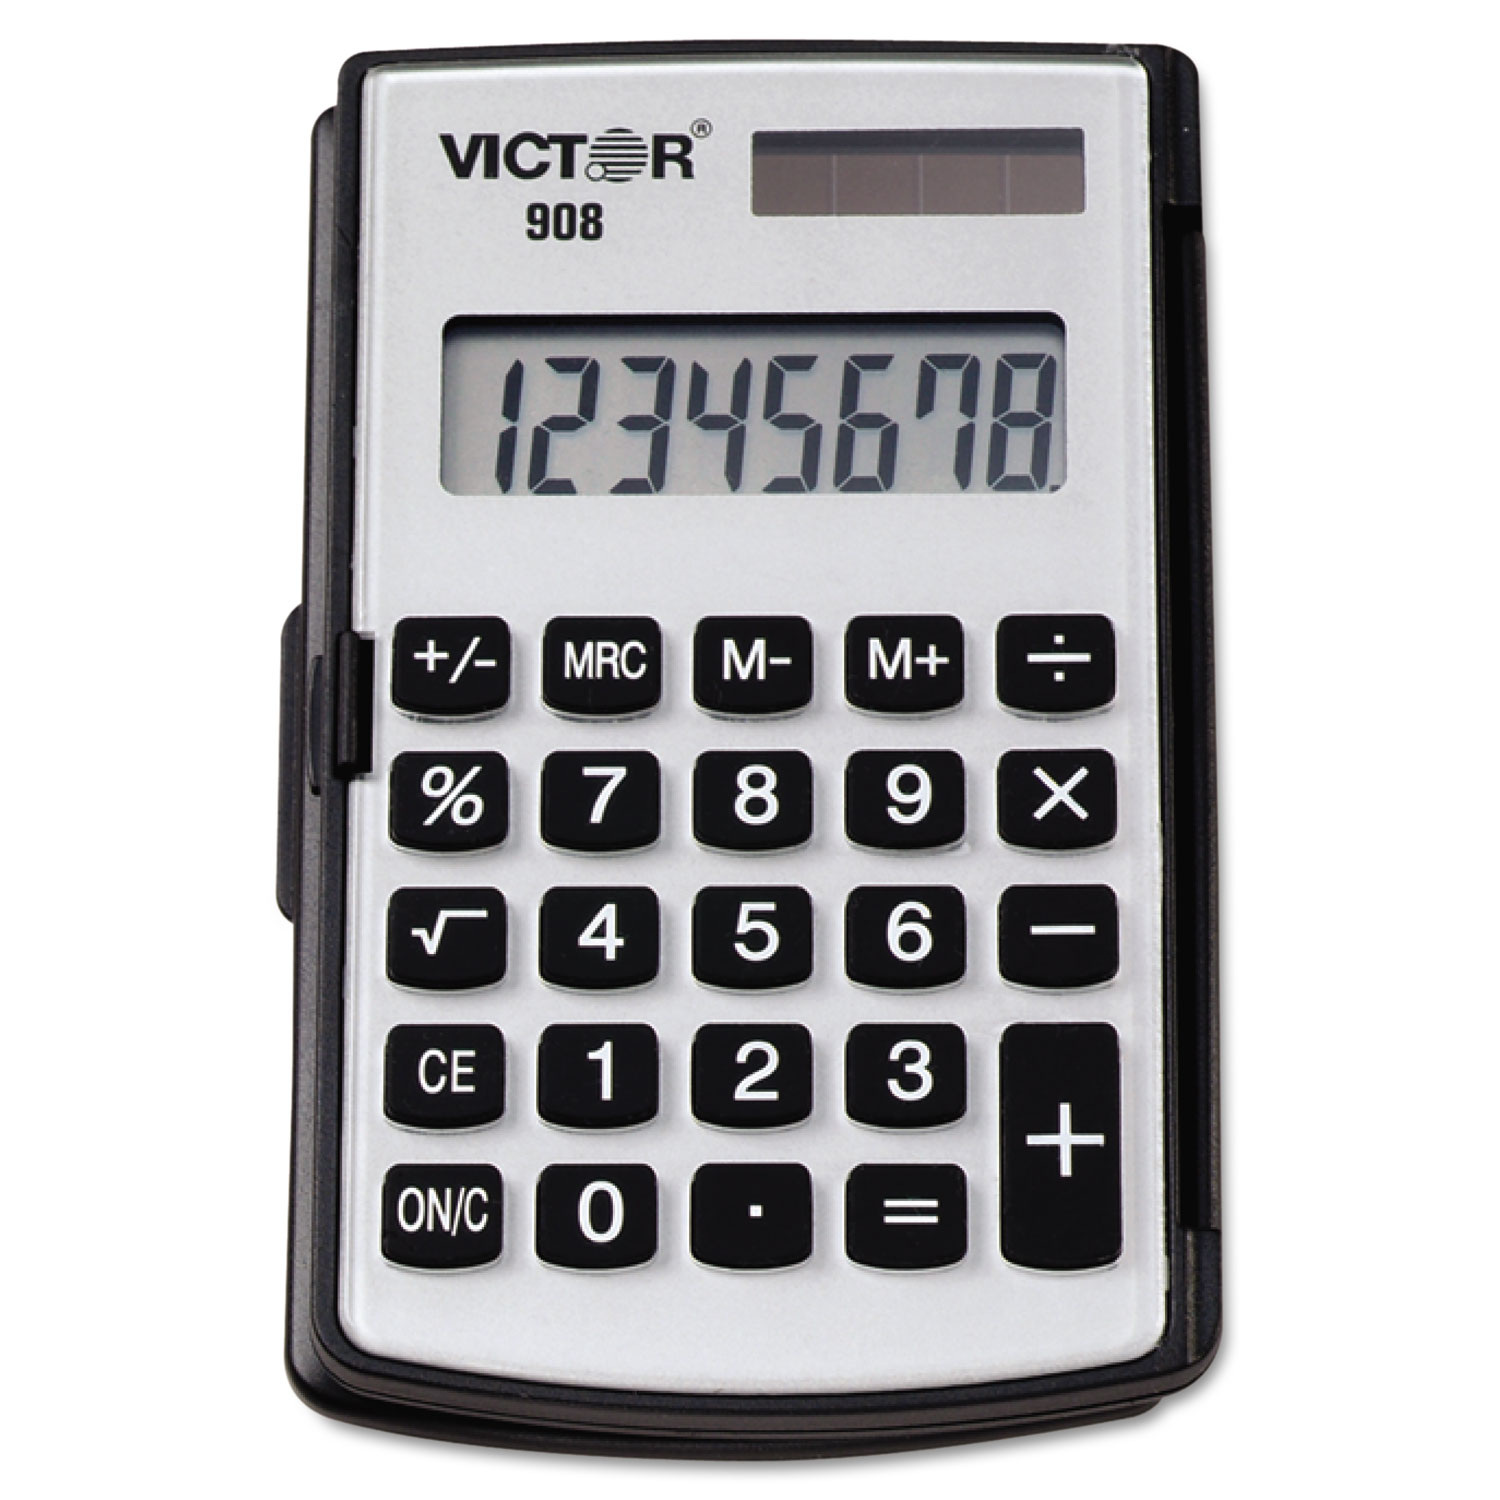  Victor 908 908 Portable Pocket/Handheld Calculator, 8-Digit LCD (VCT908) 